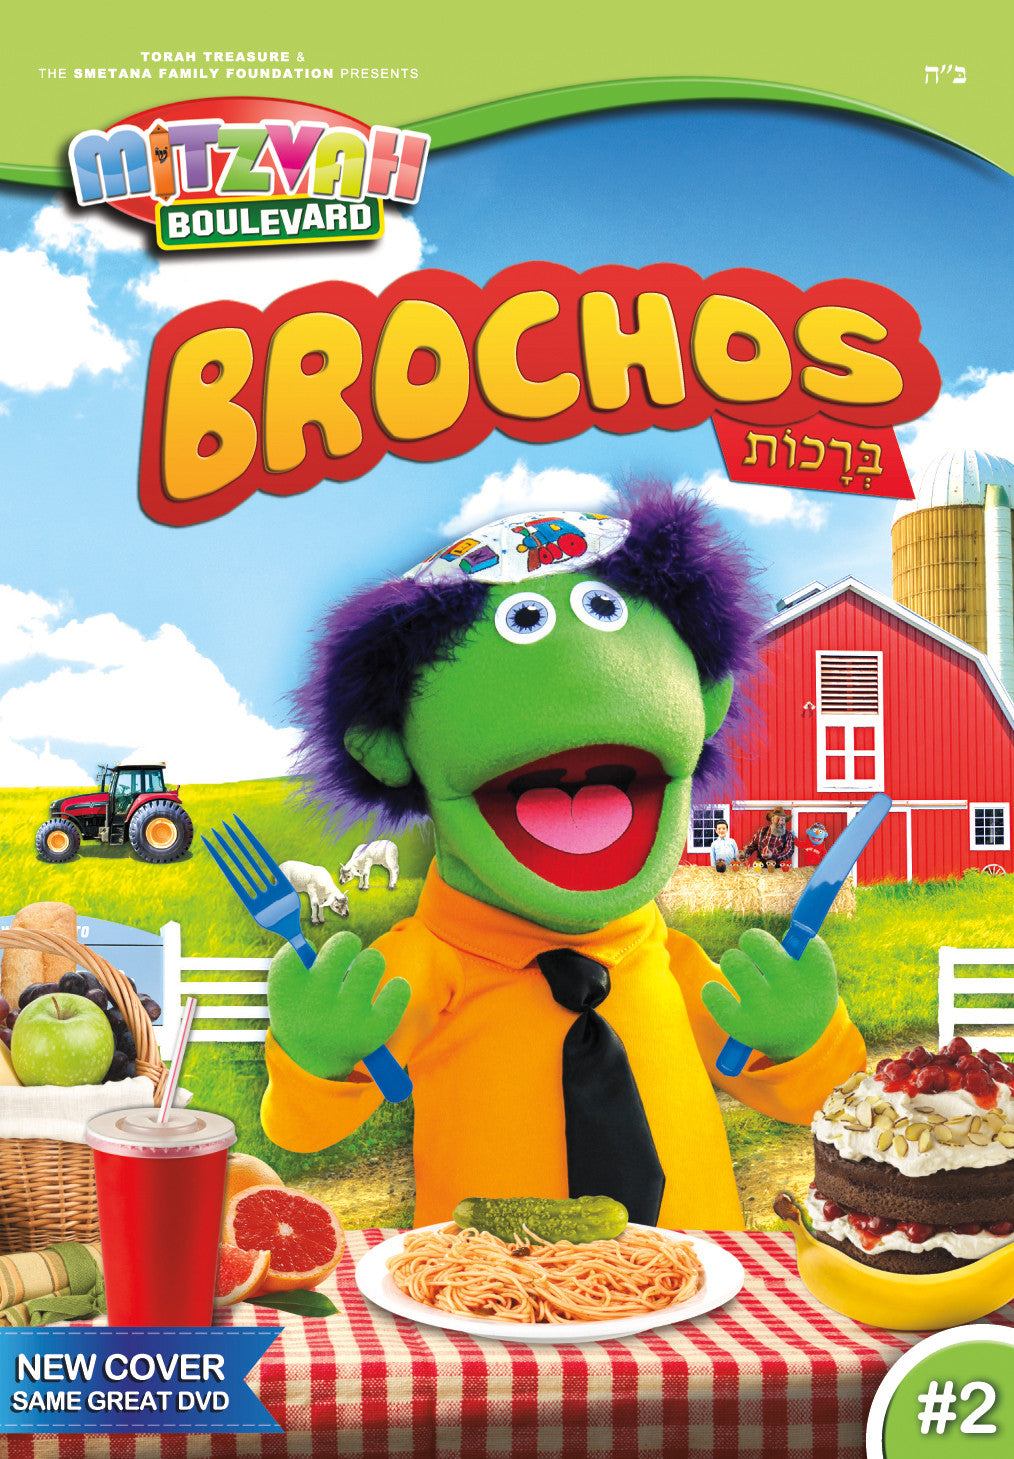 Mitzvah Boulevard - Shuey Learns His Brochos